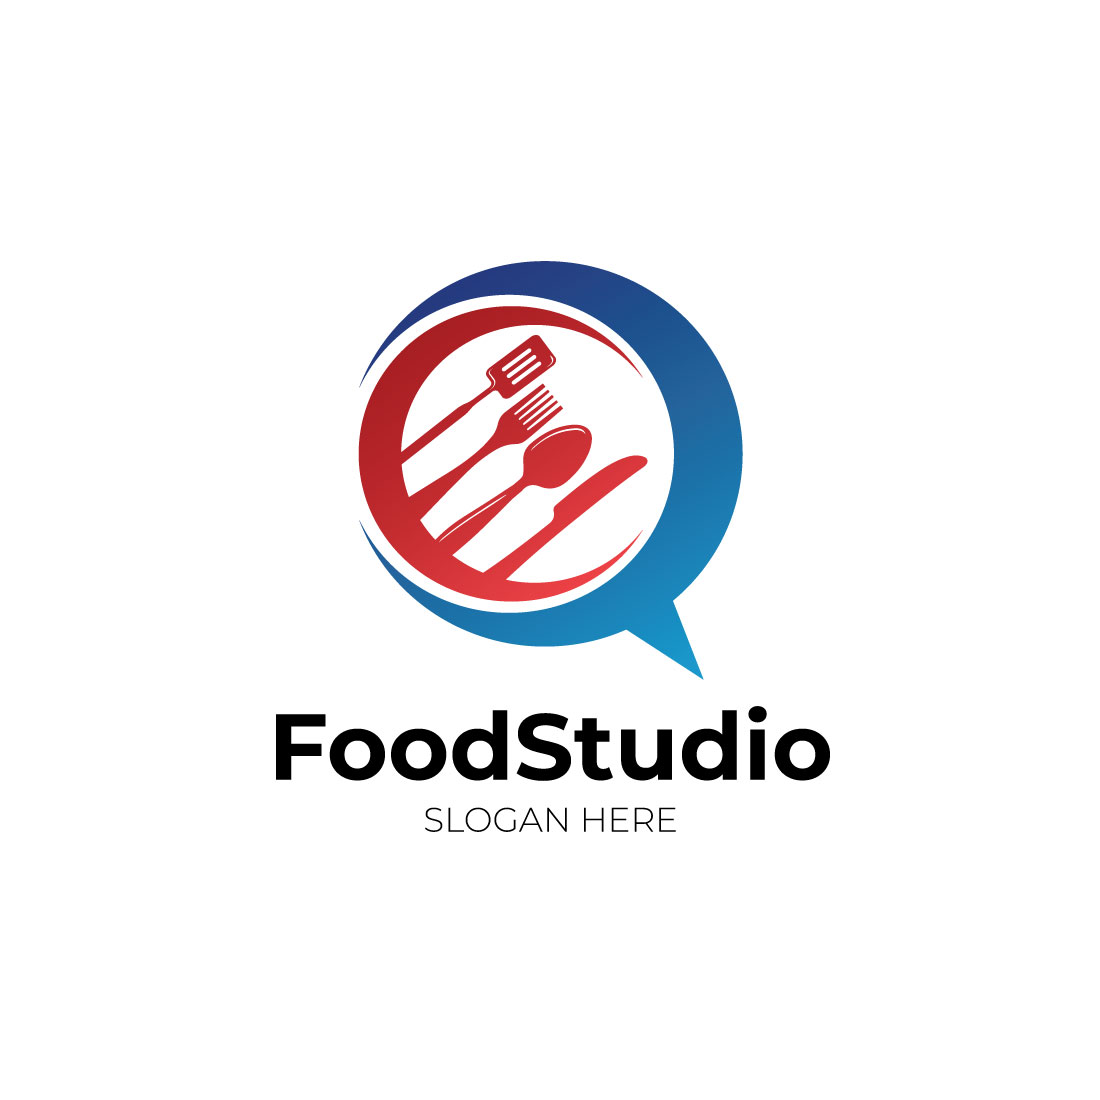 Food studio vector logo Cooking logo Restaurant vector logo design preview image.